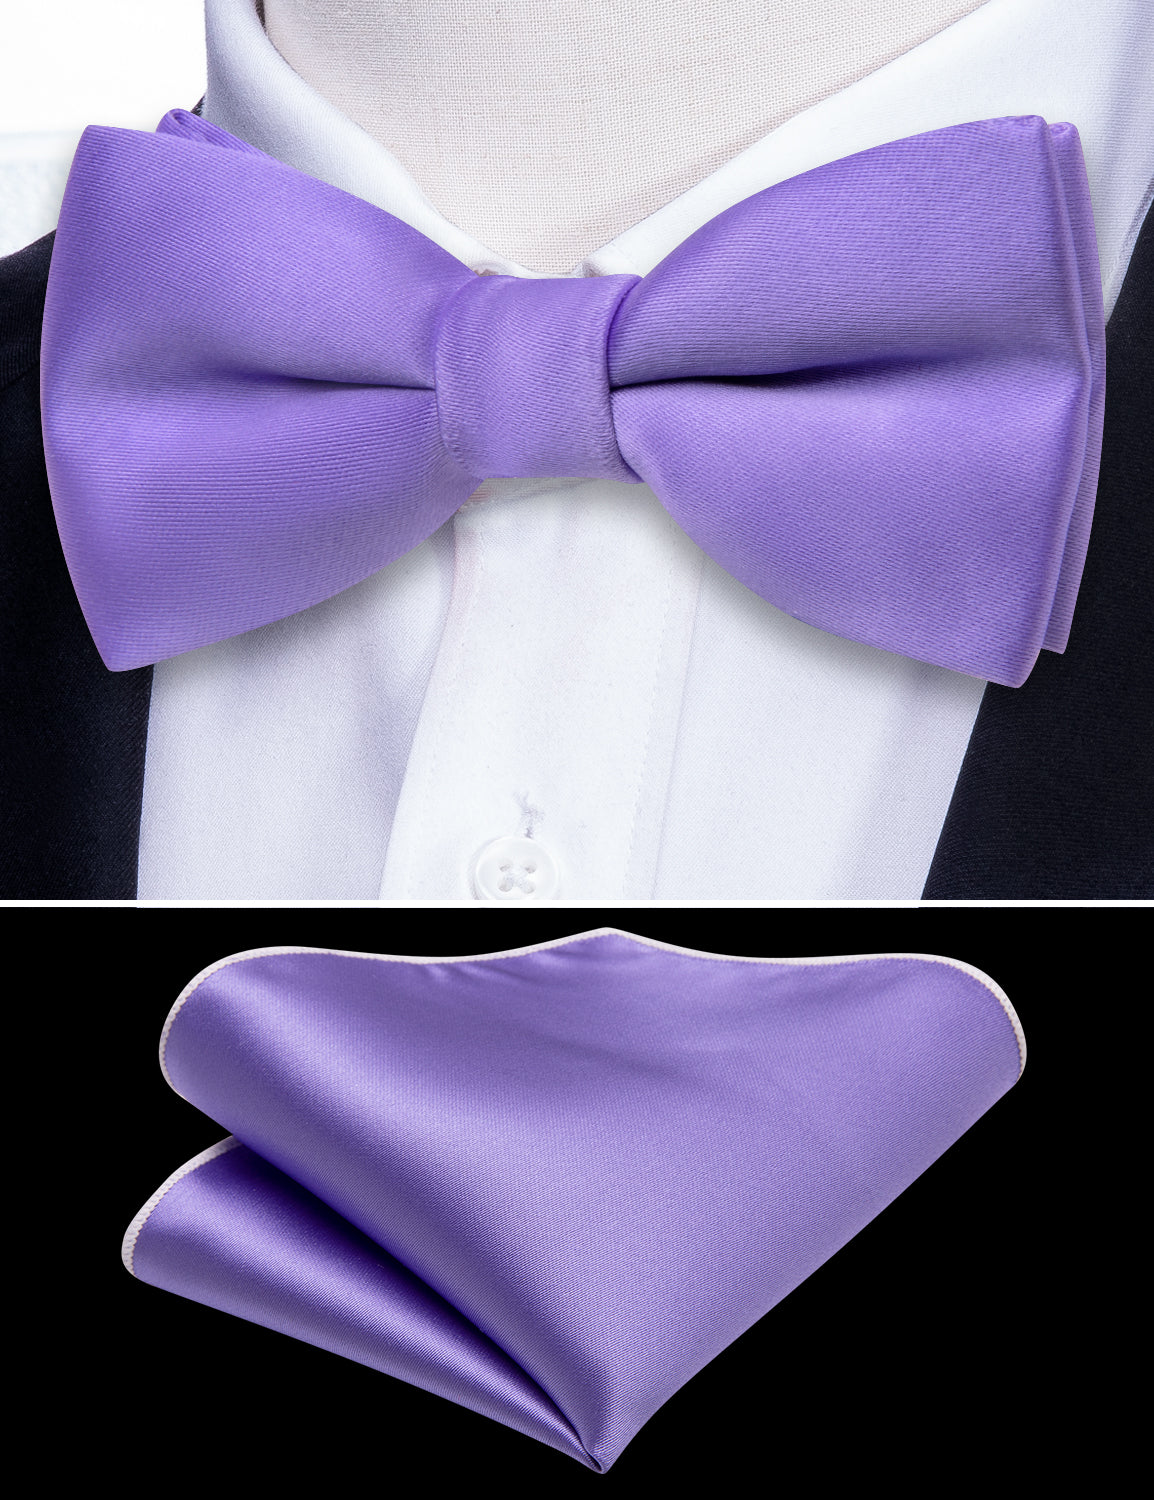 Barry.wang Kids Tie Purple Solid Children's Bow Tie Pocket Square Set